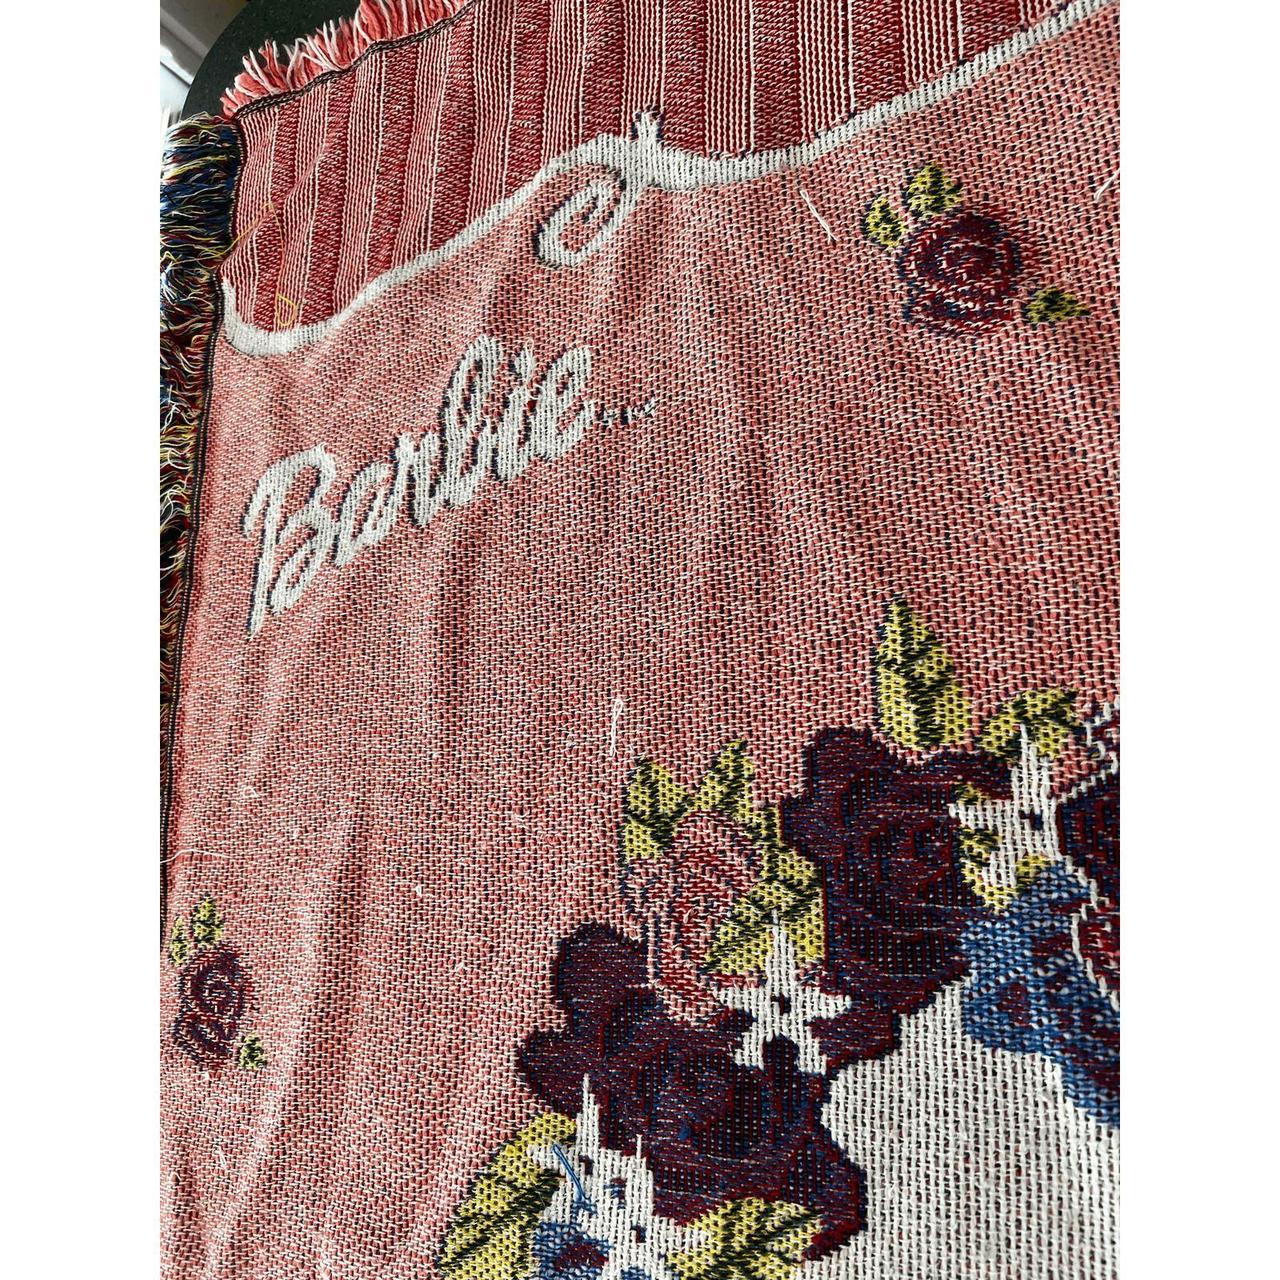 Vintage Barbie Tapestry Blanket 💗✨ No flaws! - Depop